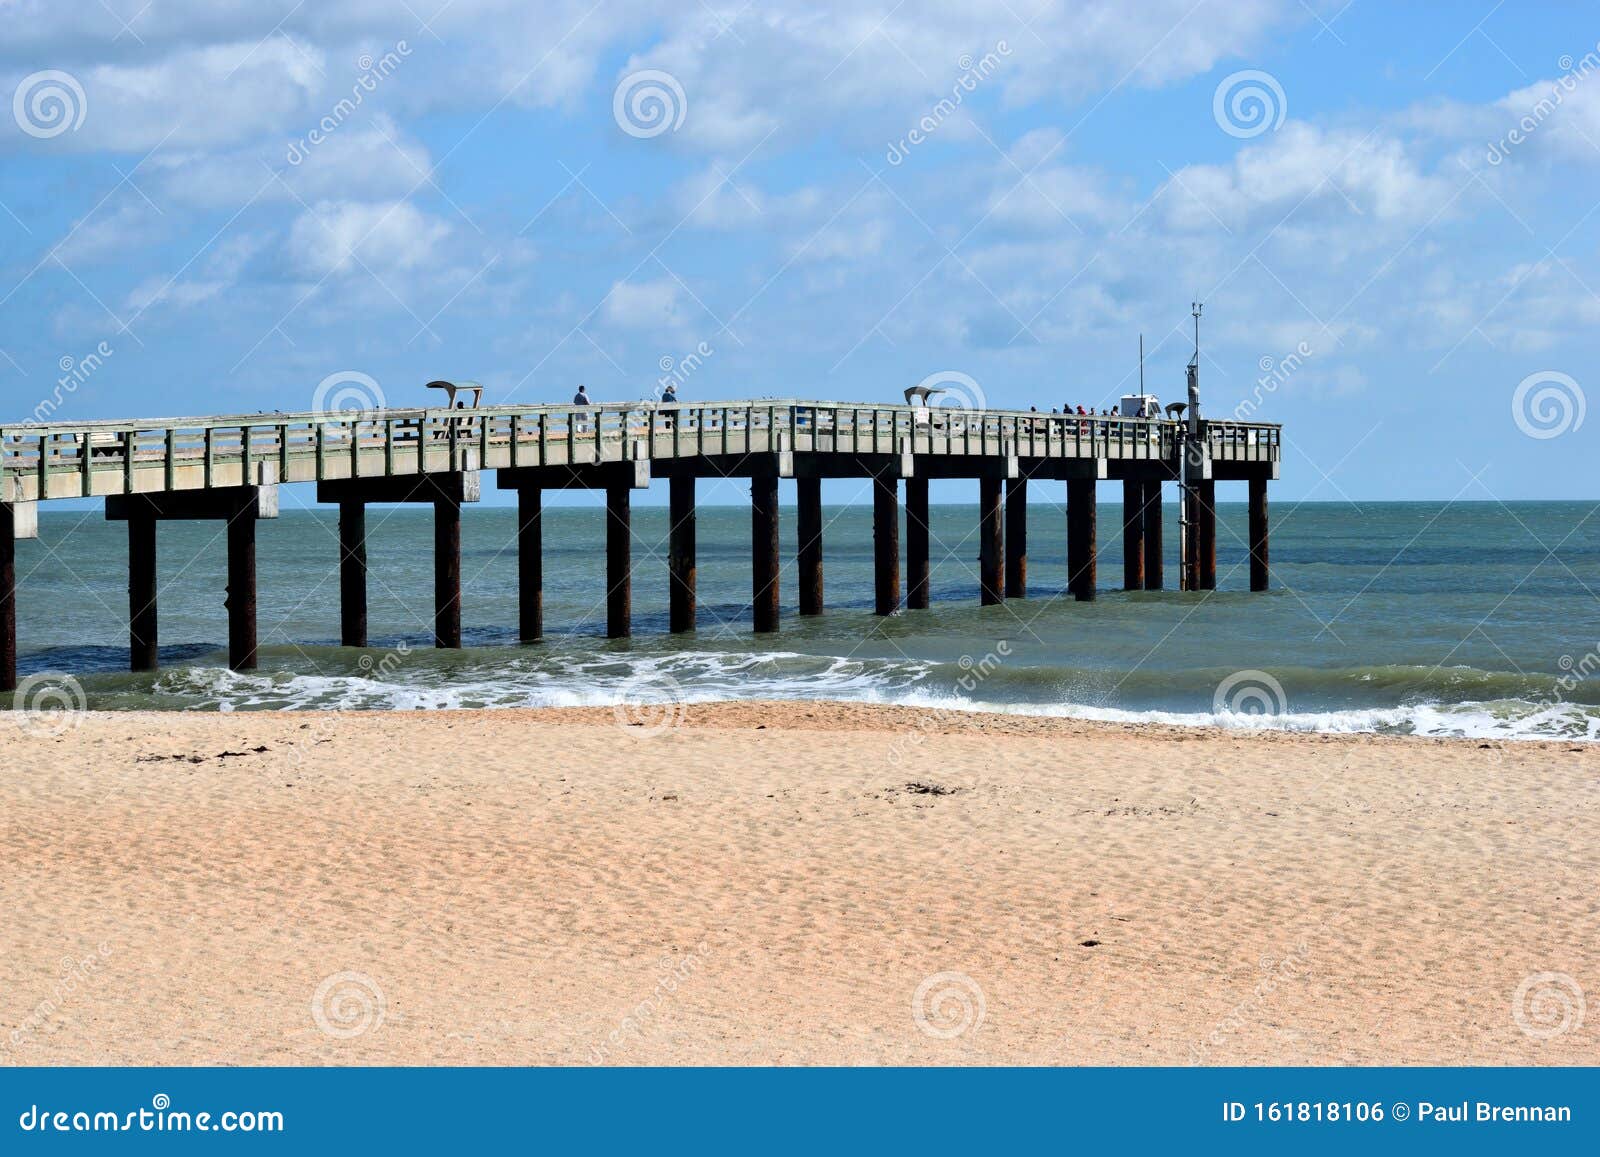 https://thumbs.dreamstime.com/z/st-augustine-beach-florida-fishing-pier-ocean-background-historic-161818106.jpg